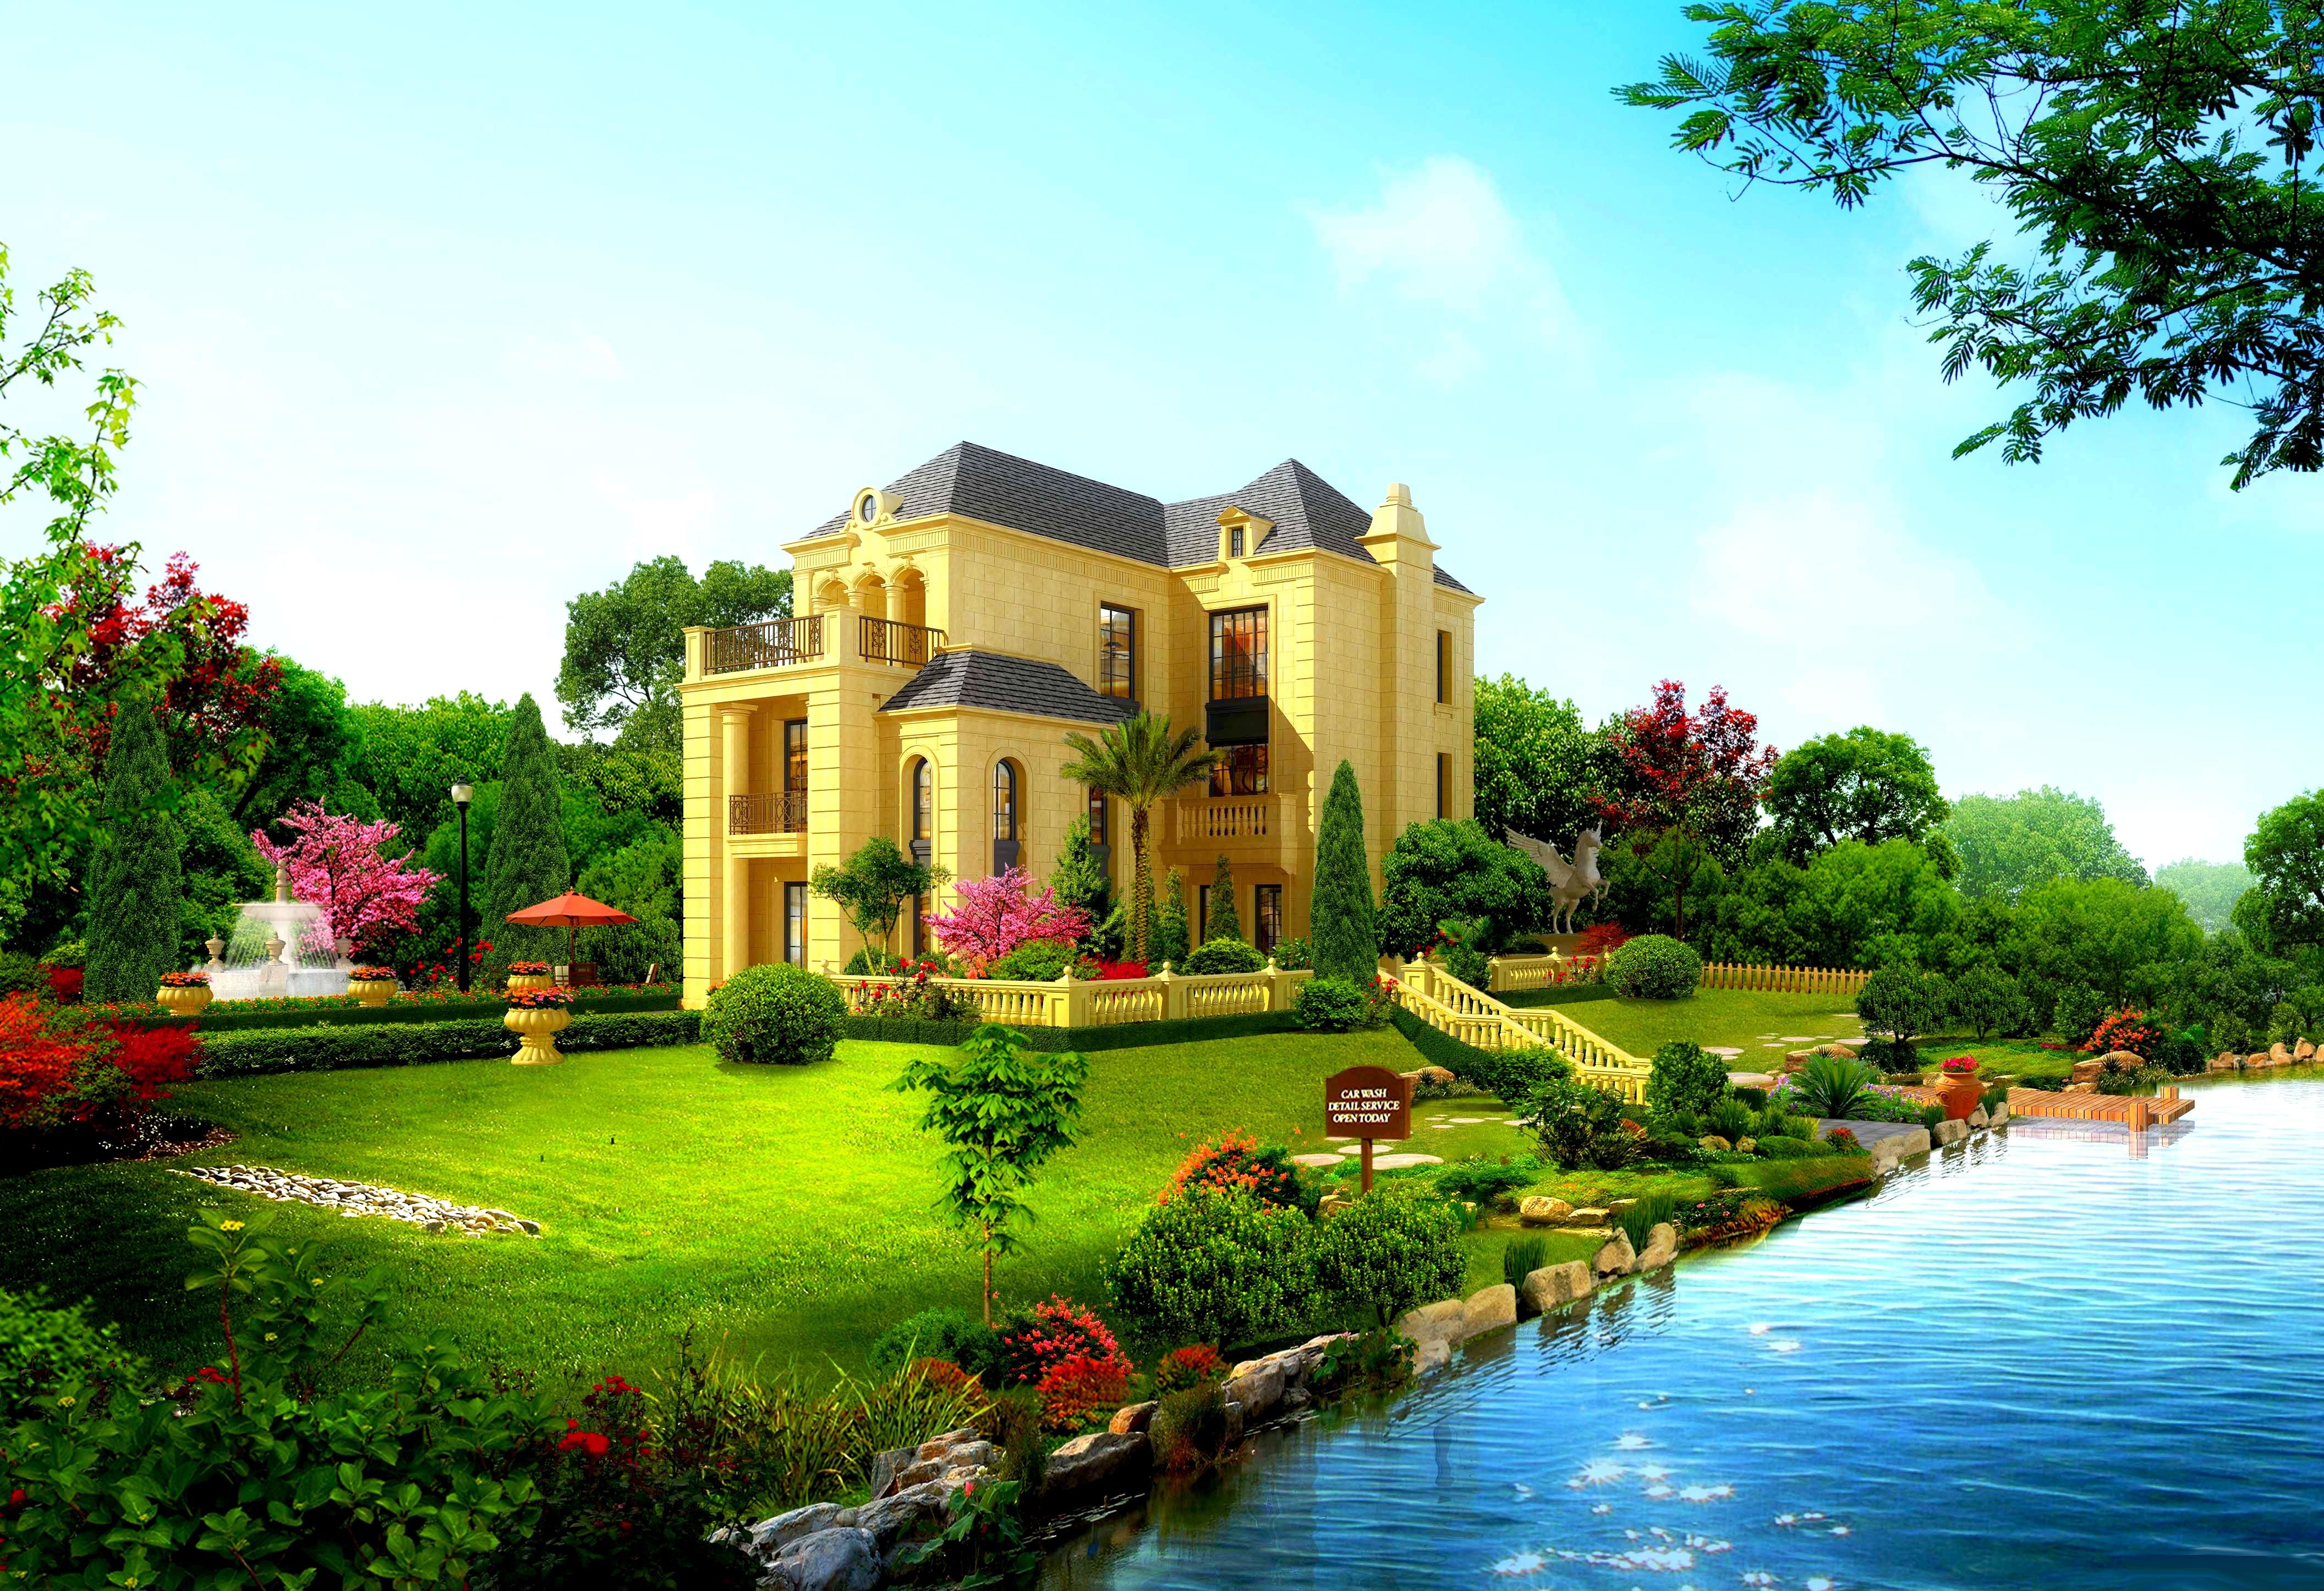 Heavenly Beautiful Luxury Houses Image & Wallpaper